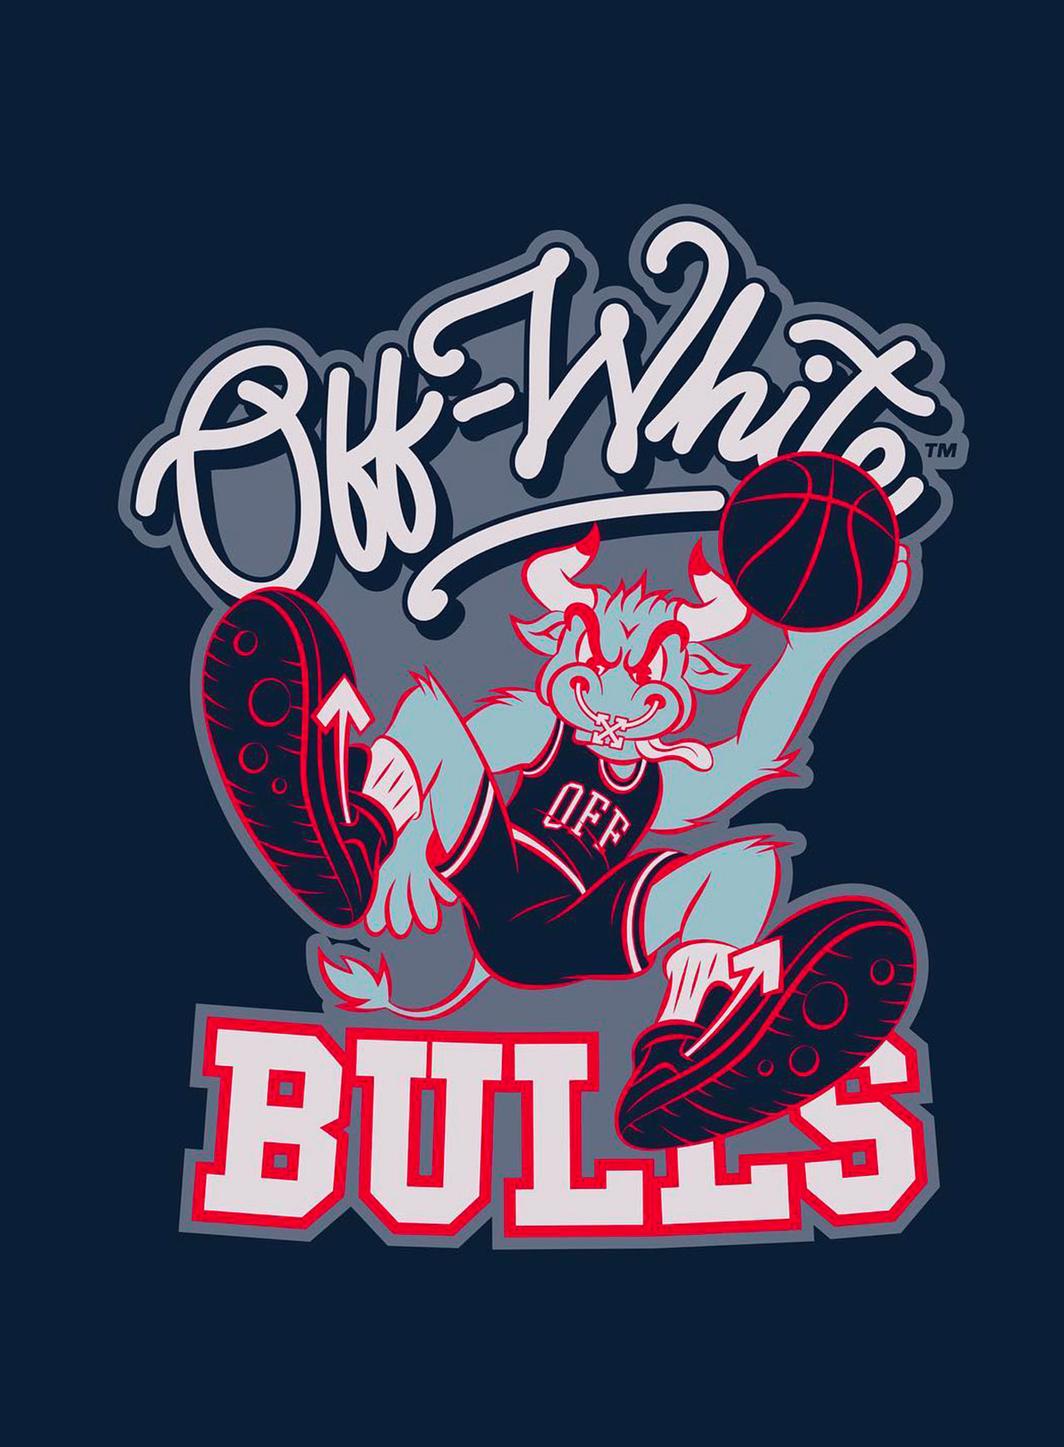 Off-White annonce sa collaboration avec les Chicago Bulls.